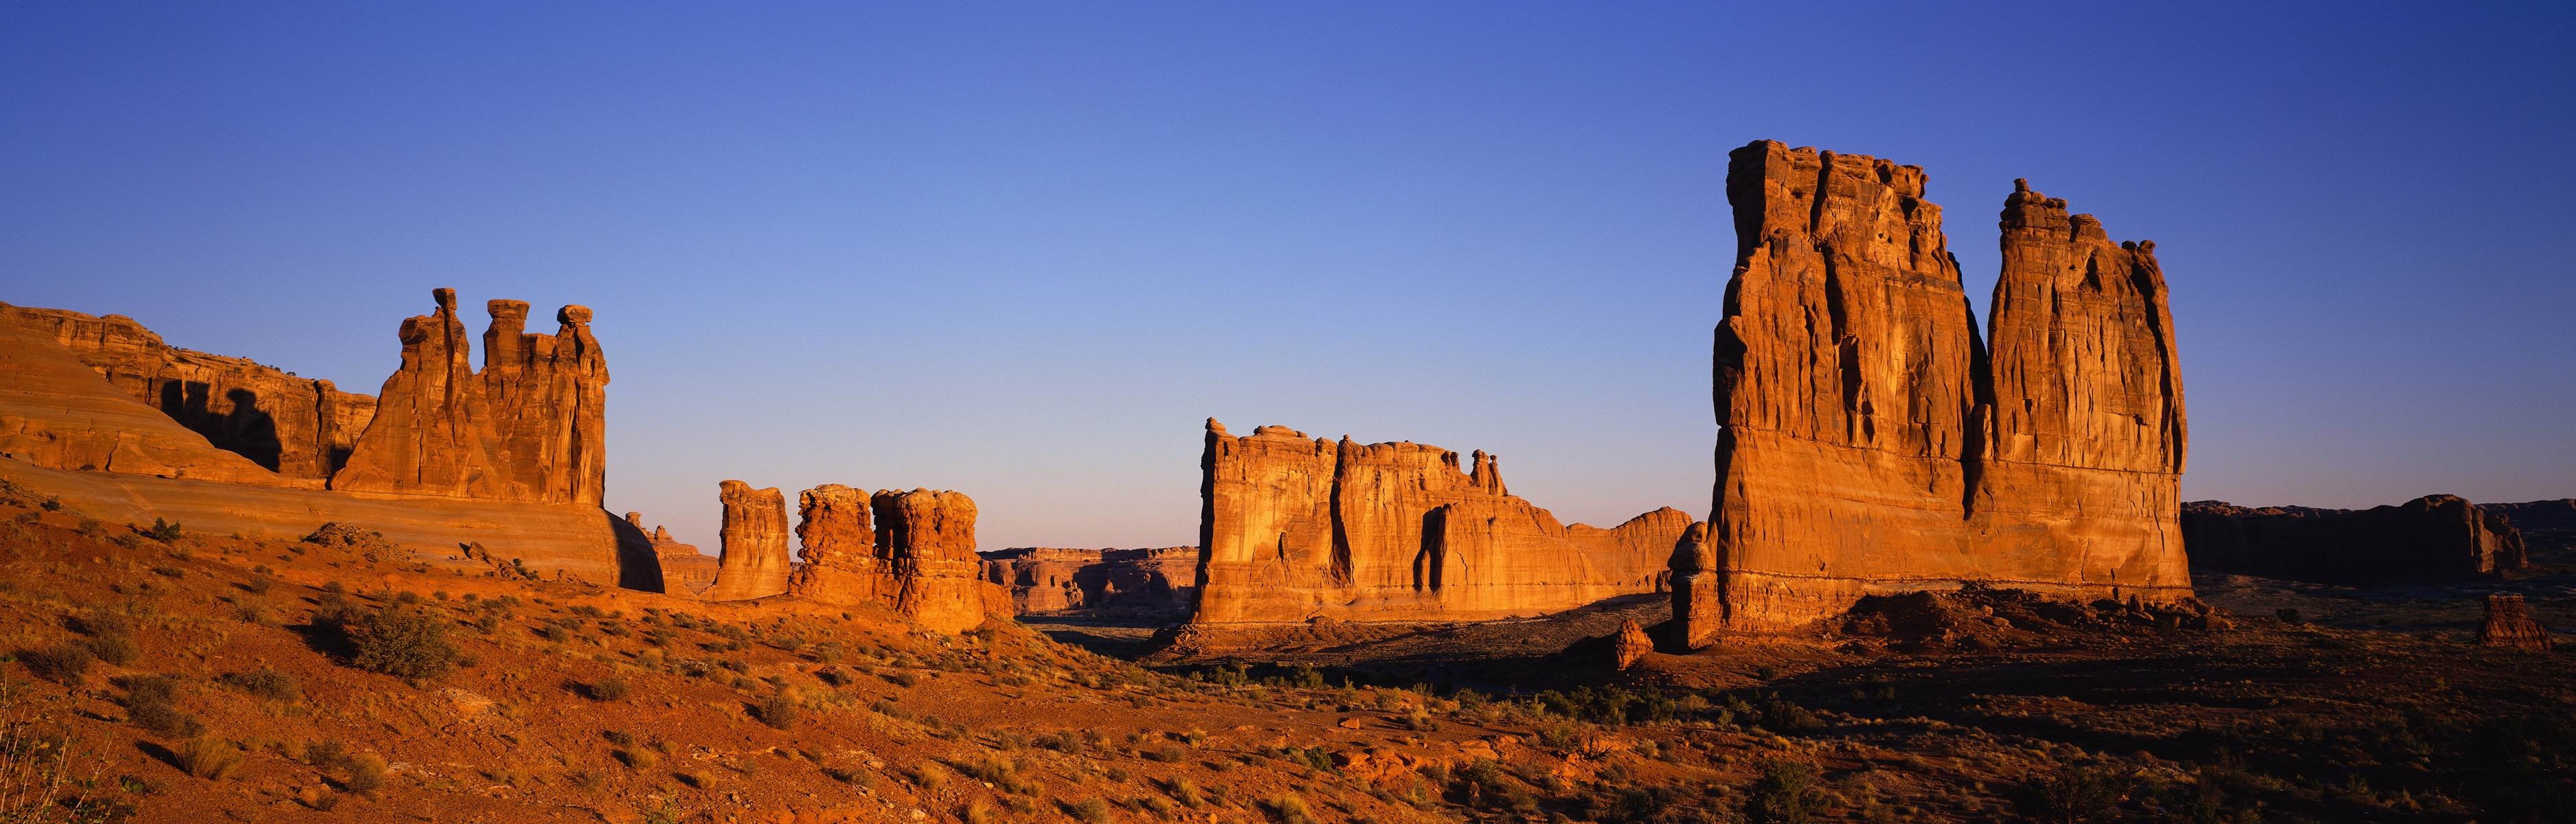 Landscape Rock Formation Dual Monitors Cliff Desert Arches National Park Arizona 3750x1200